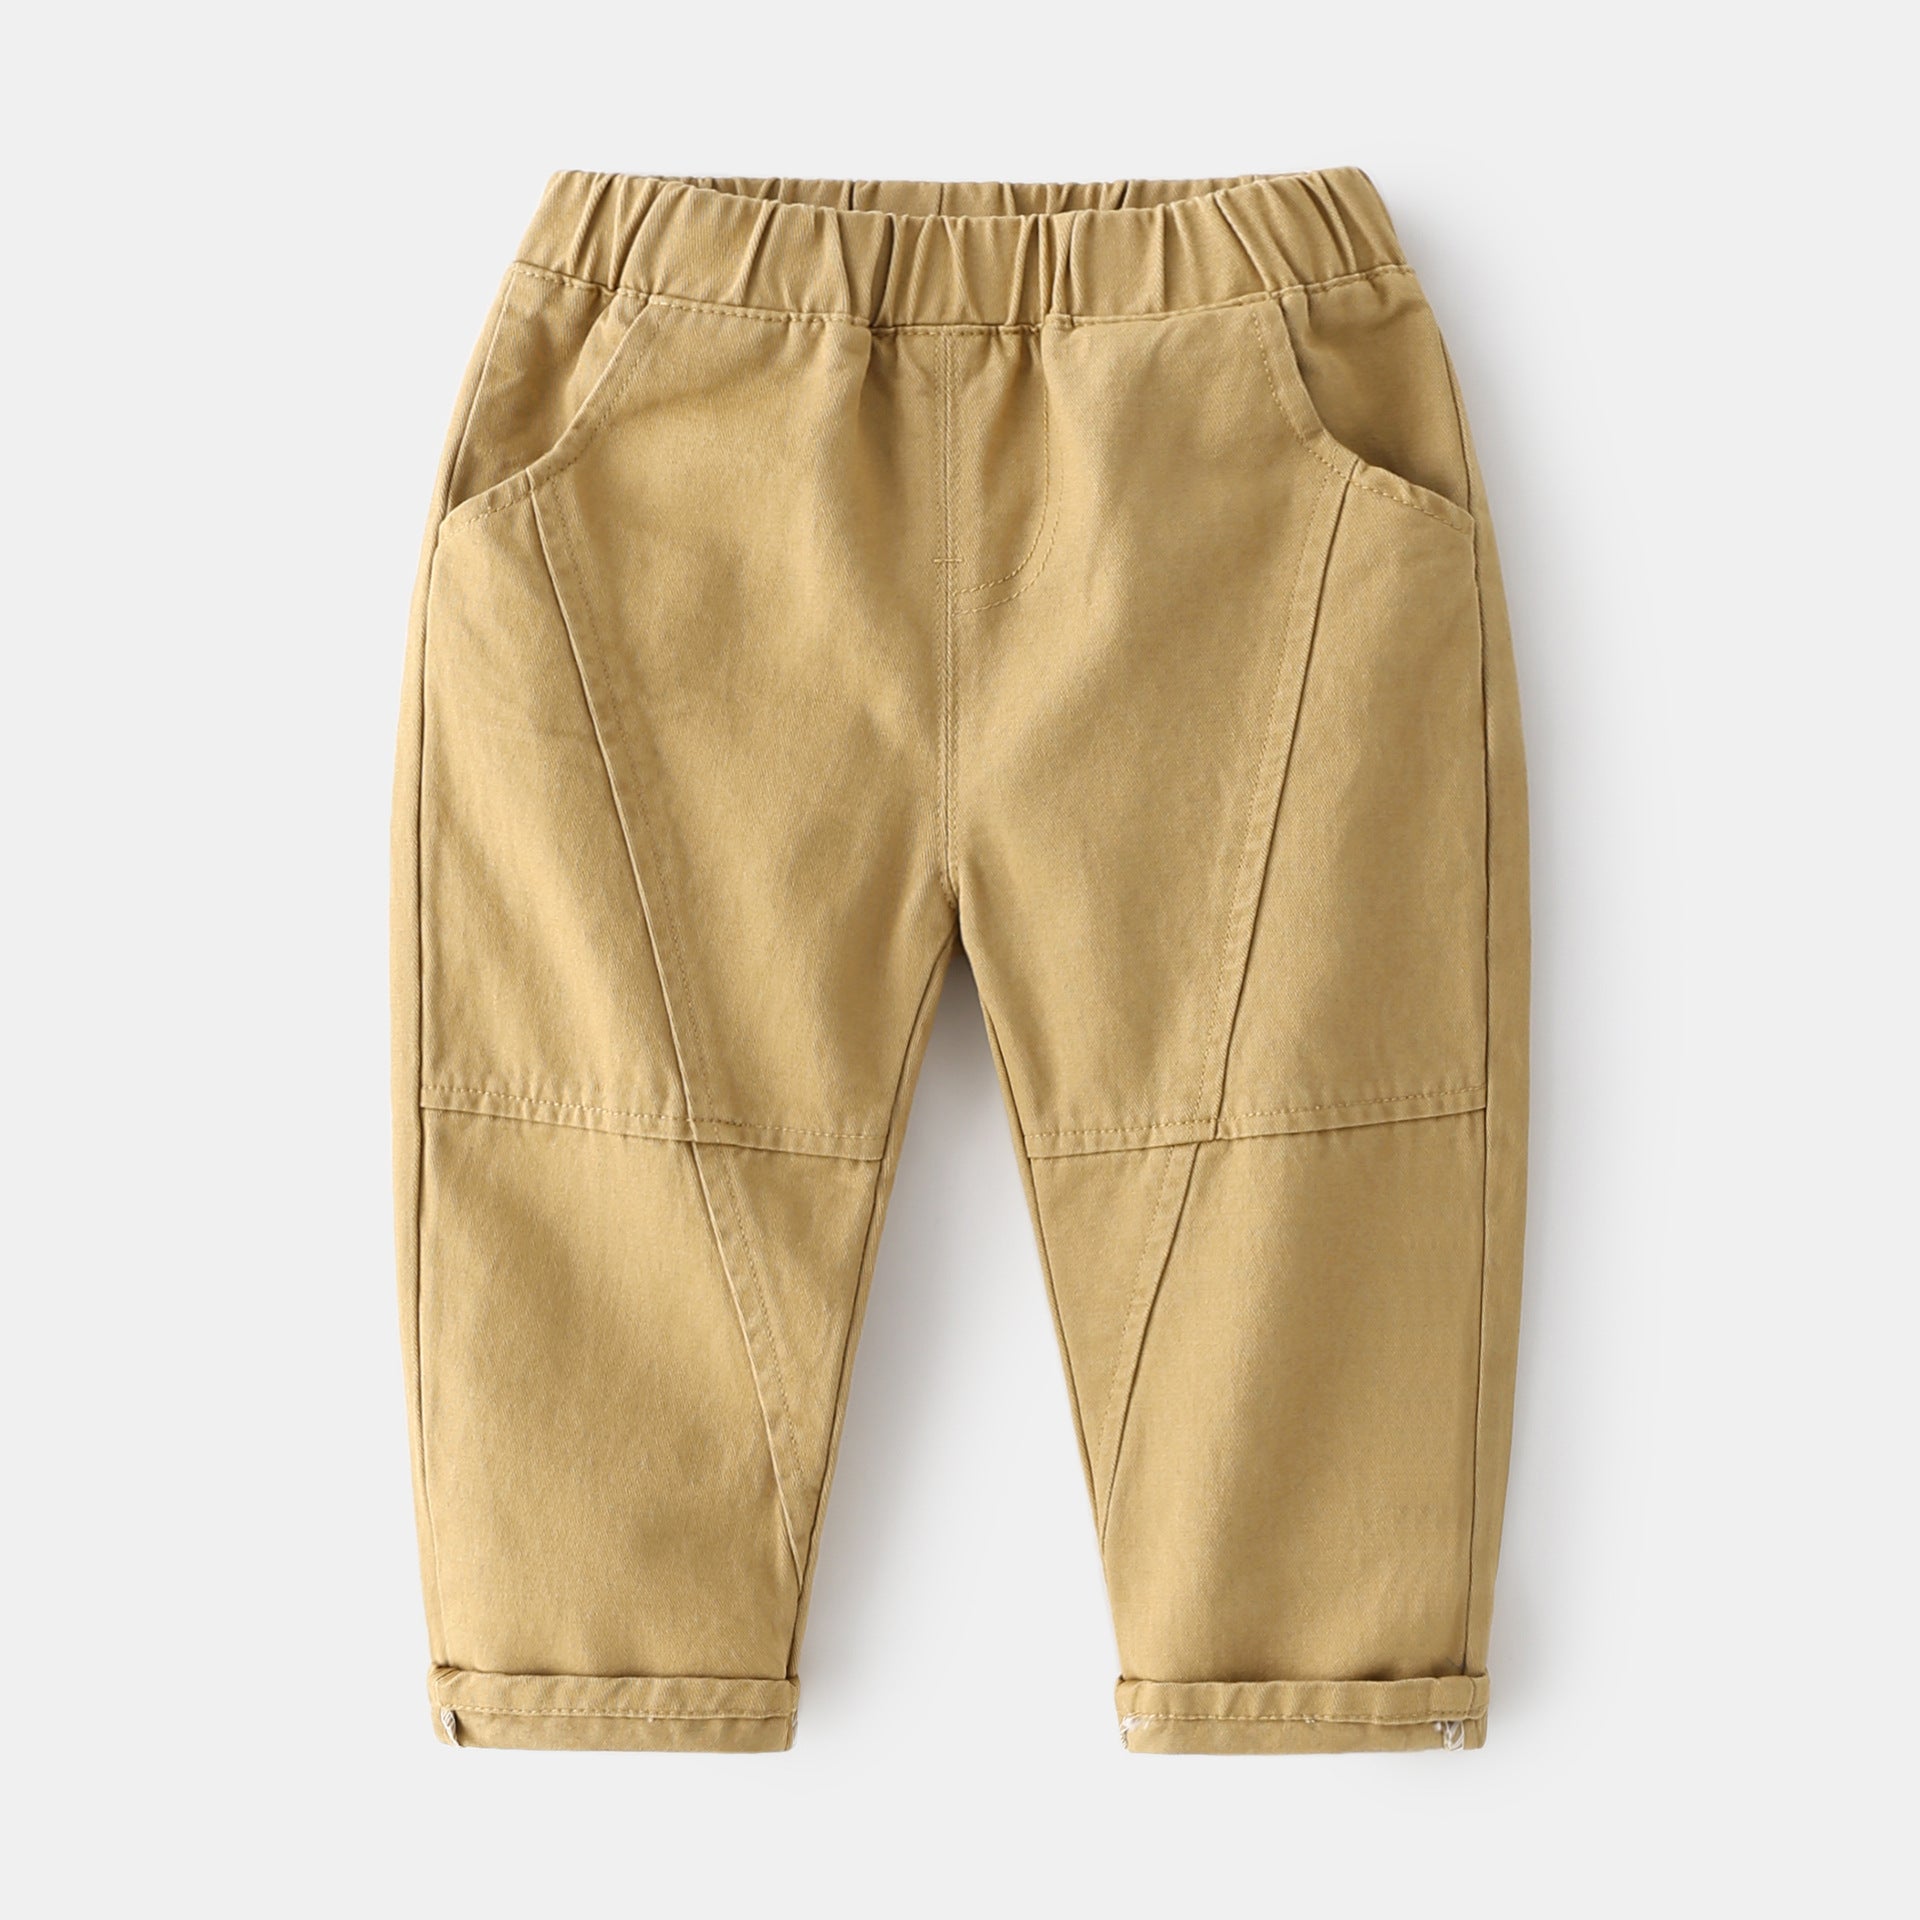 [513257] - Bawahan Trendy Celana Chino Anak Import - Motif Crossing Line